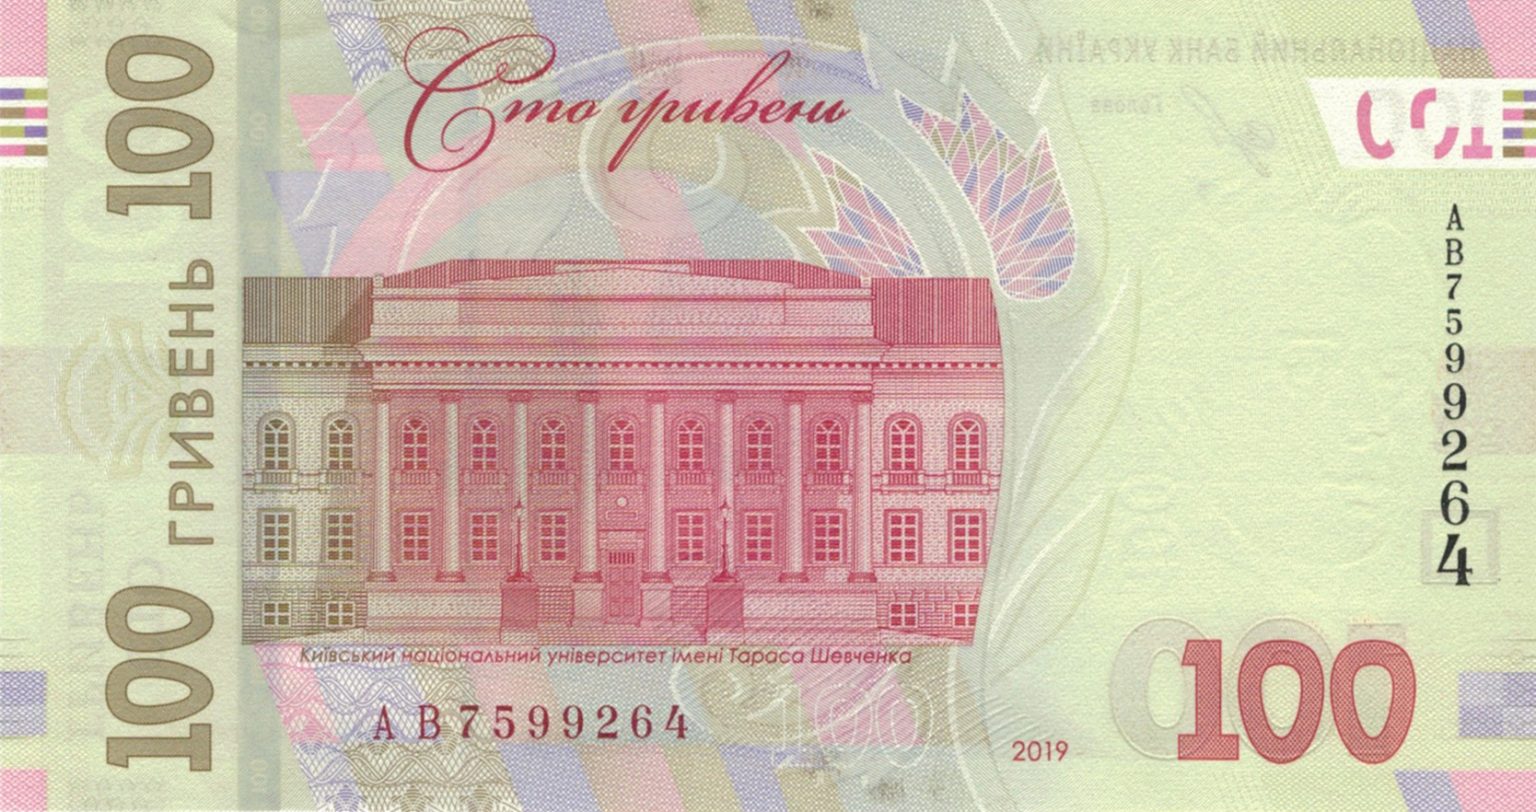 Ukraine new sig/date (2019) 100-hryvnia note (B856b) confirmed ...